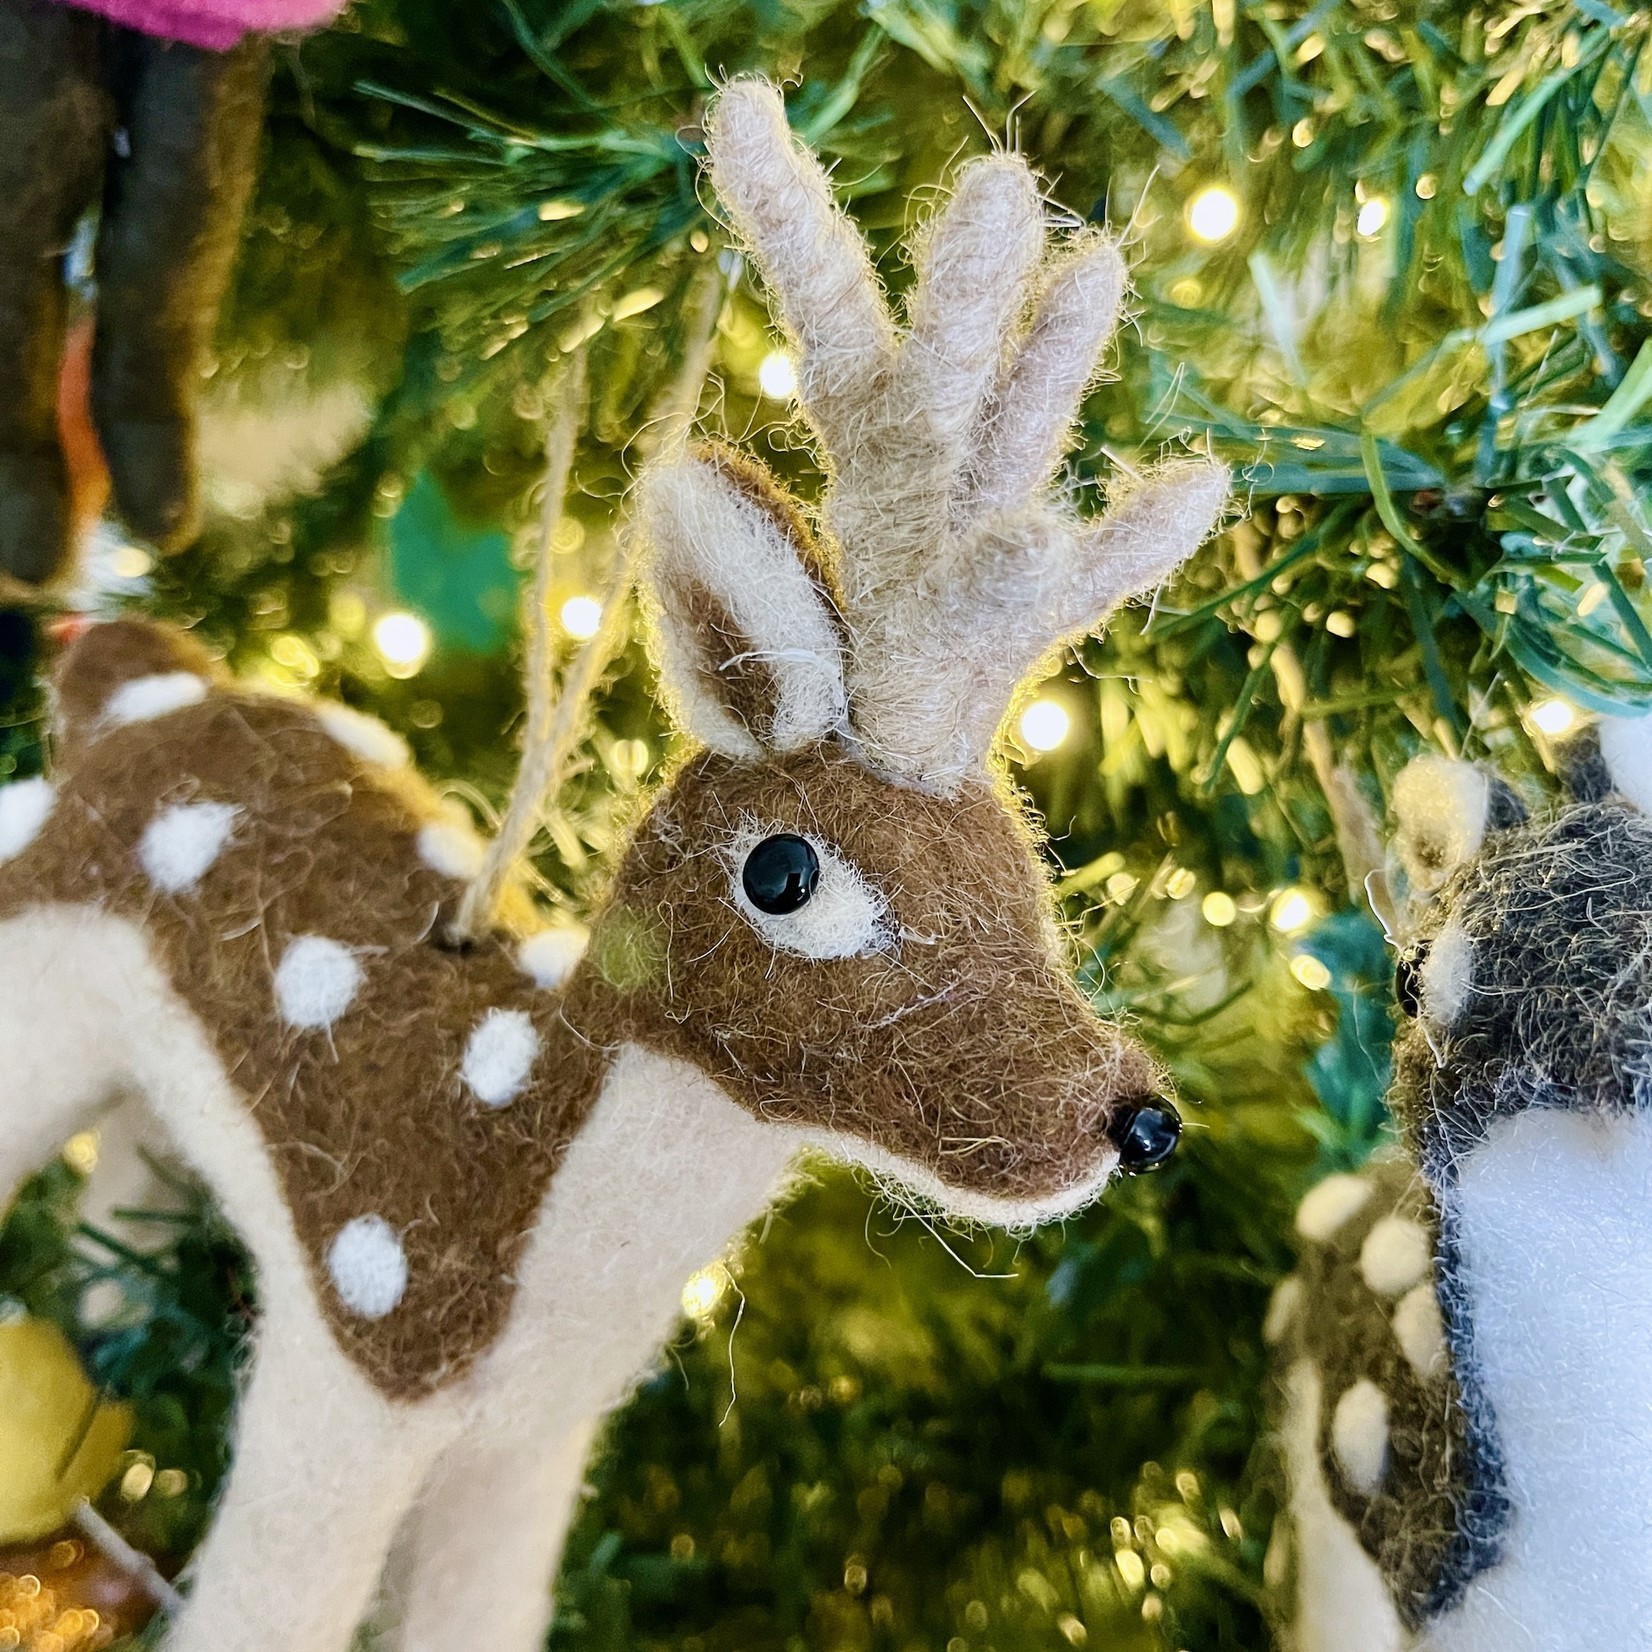 Faux Fur Deer Ornament